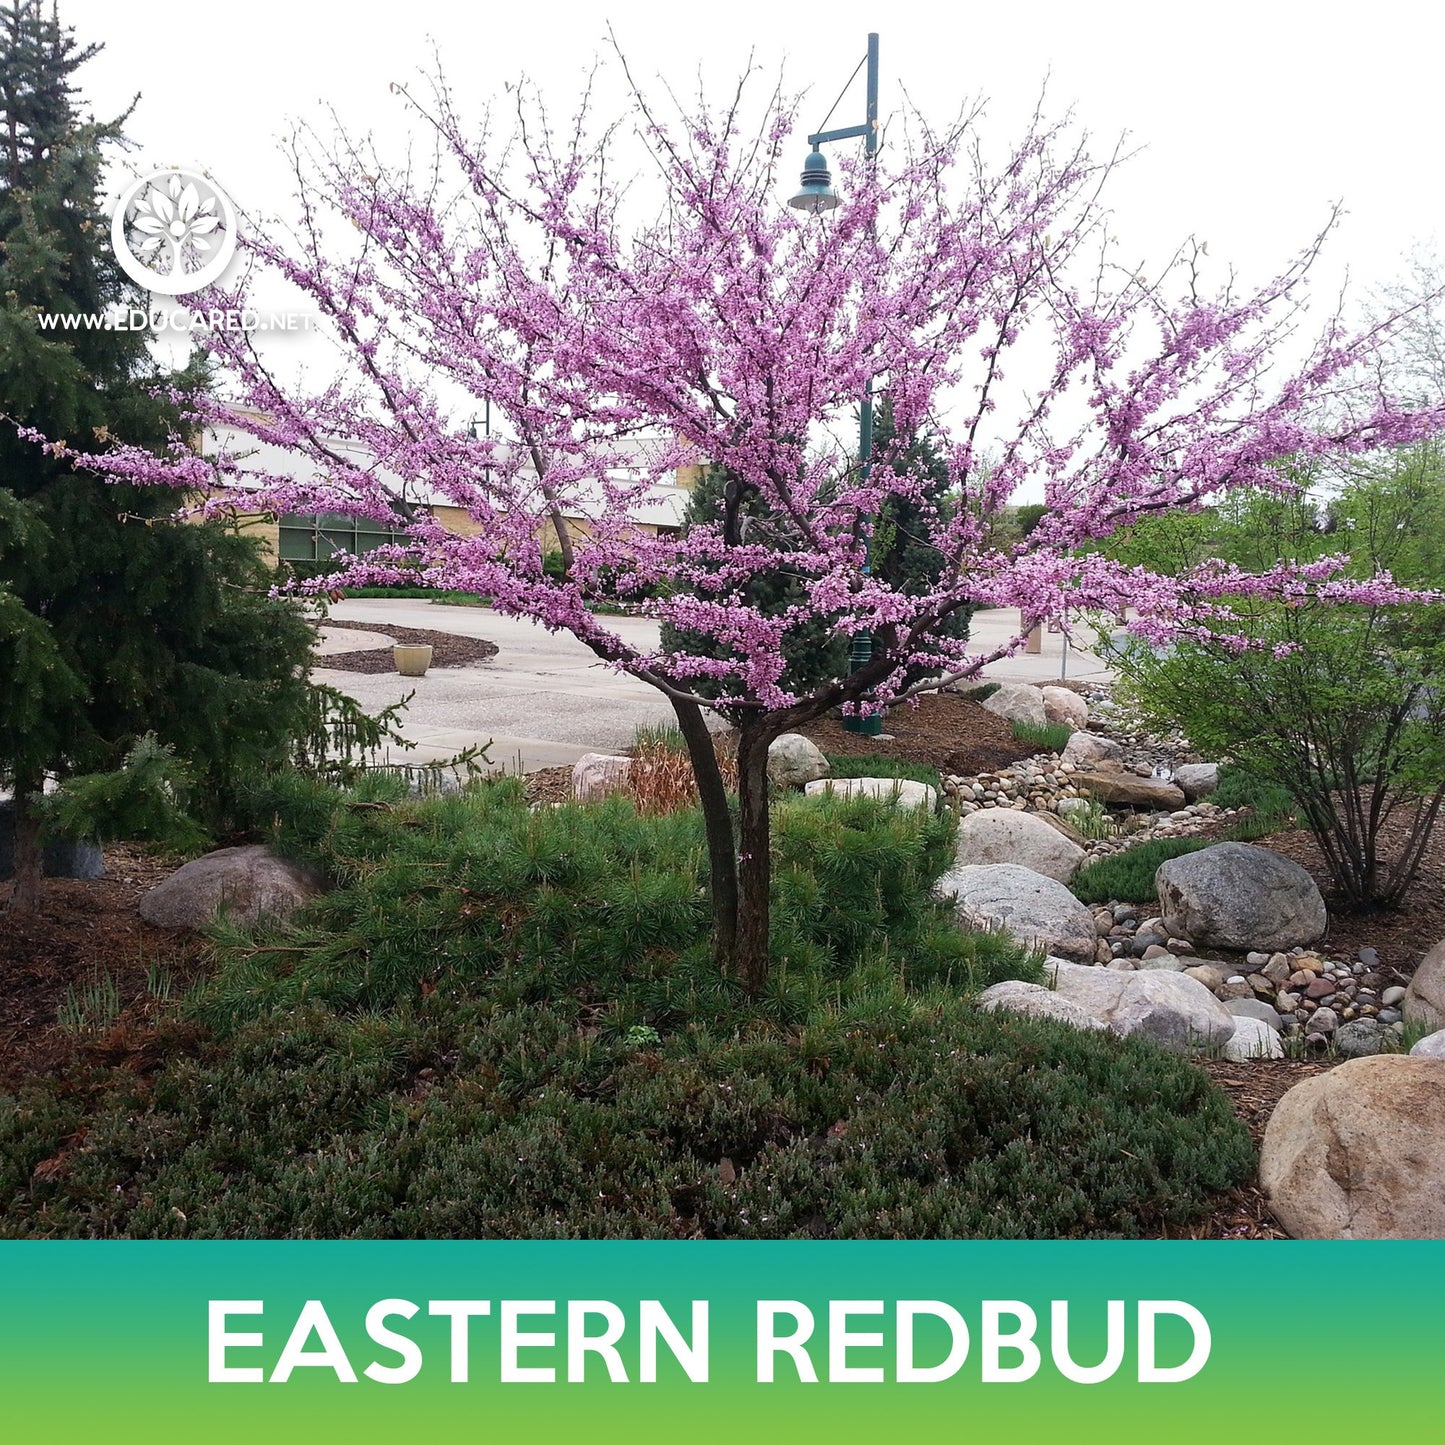 Eastern Redbud Seeds, Cercis canadensis